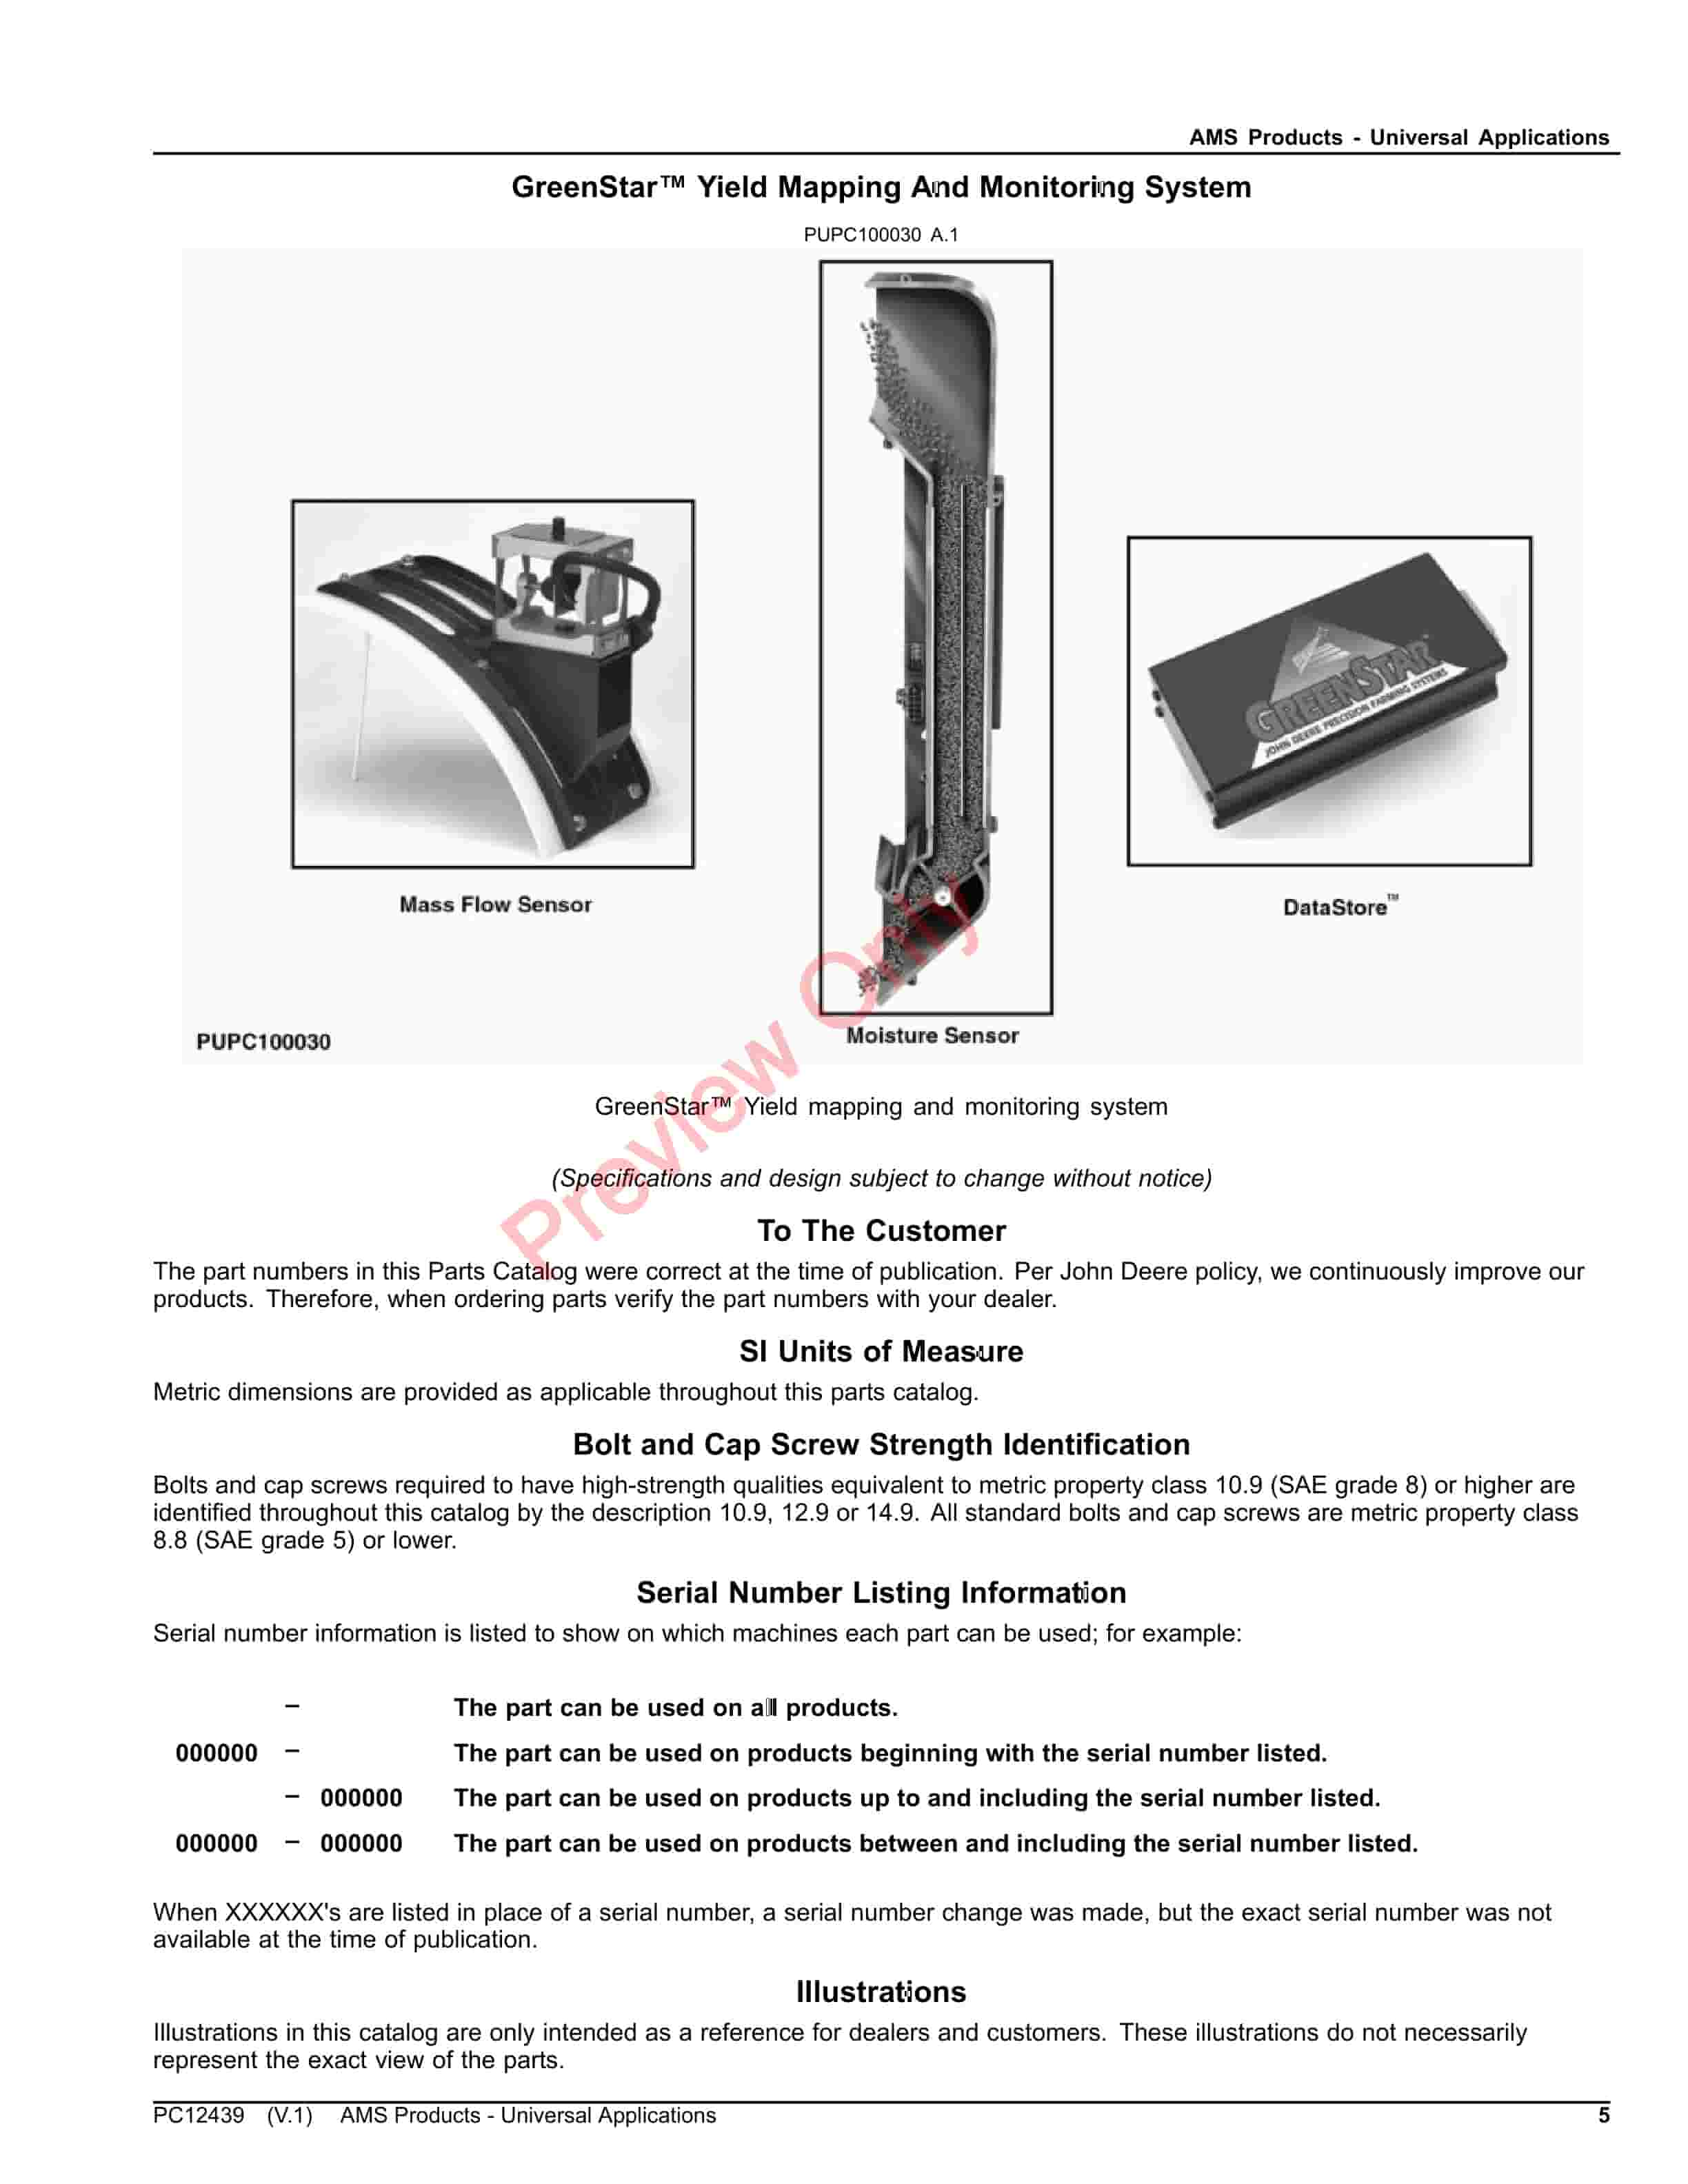 John Deere AMS Products &#8211; Universal Applications Parts Catalog PC12439 28NOV23-5